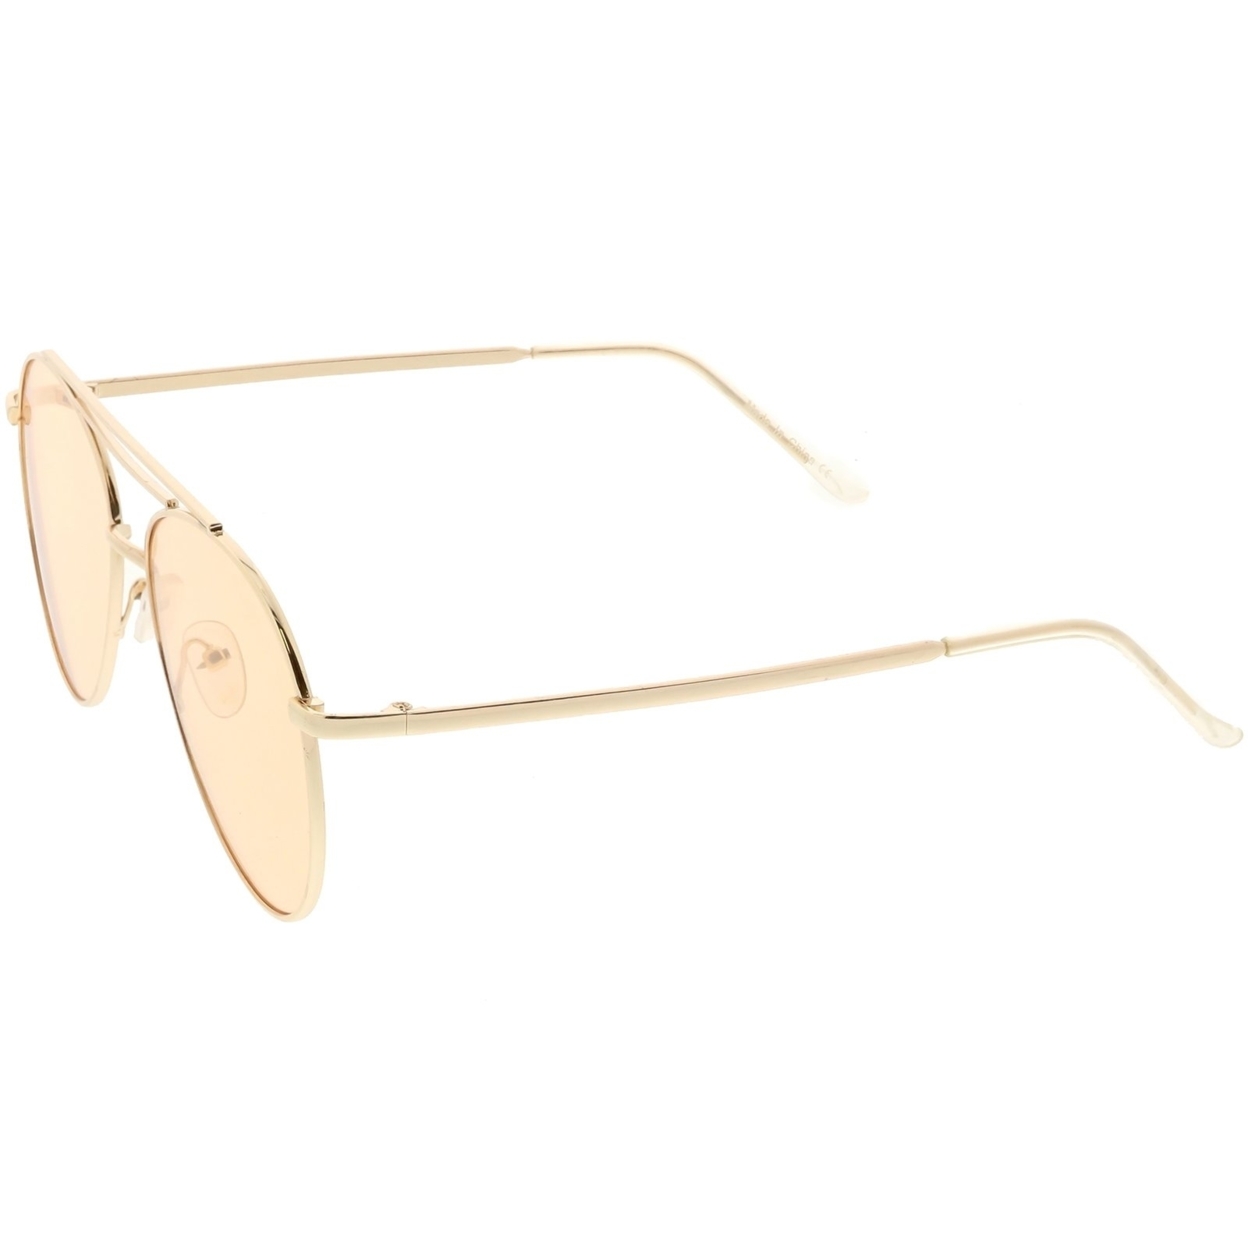 Premium Aviator Sunglasses Double Crossbar Slim Metal Arms Round Flat Lens 55mm - Silver / Clear